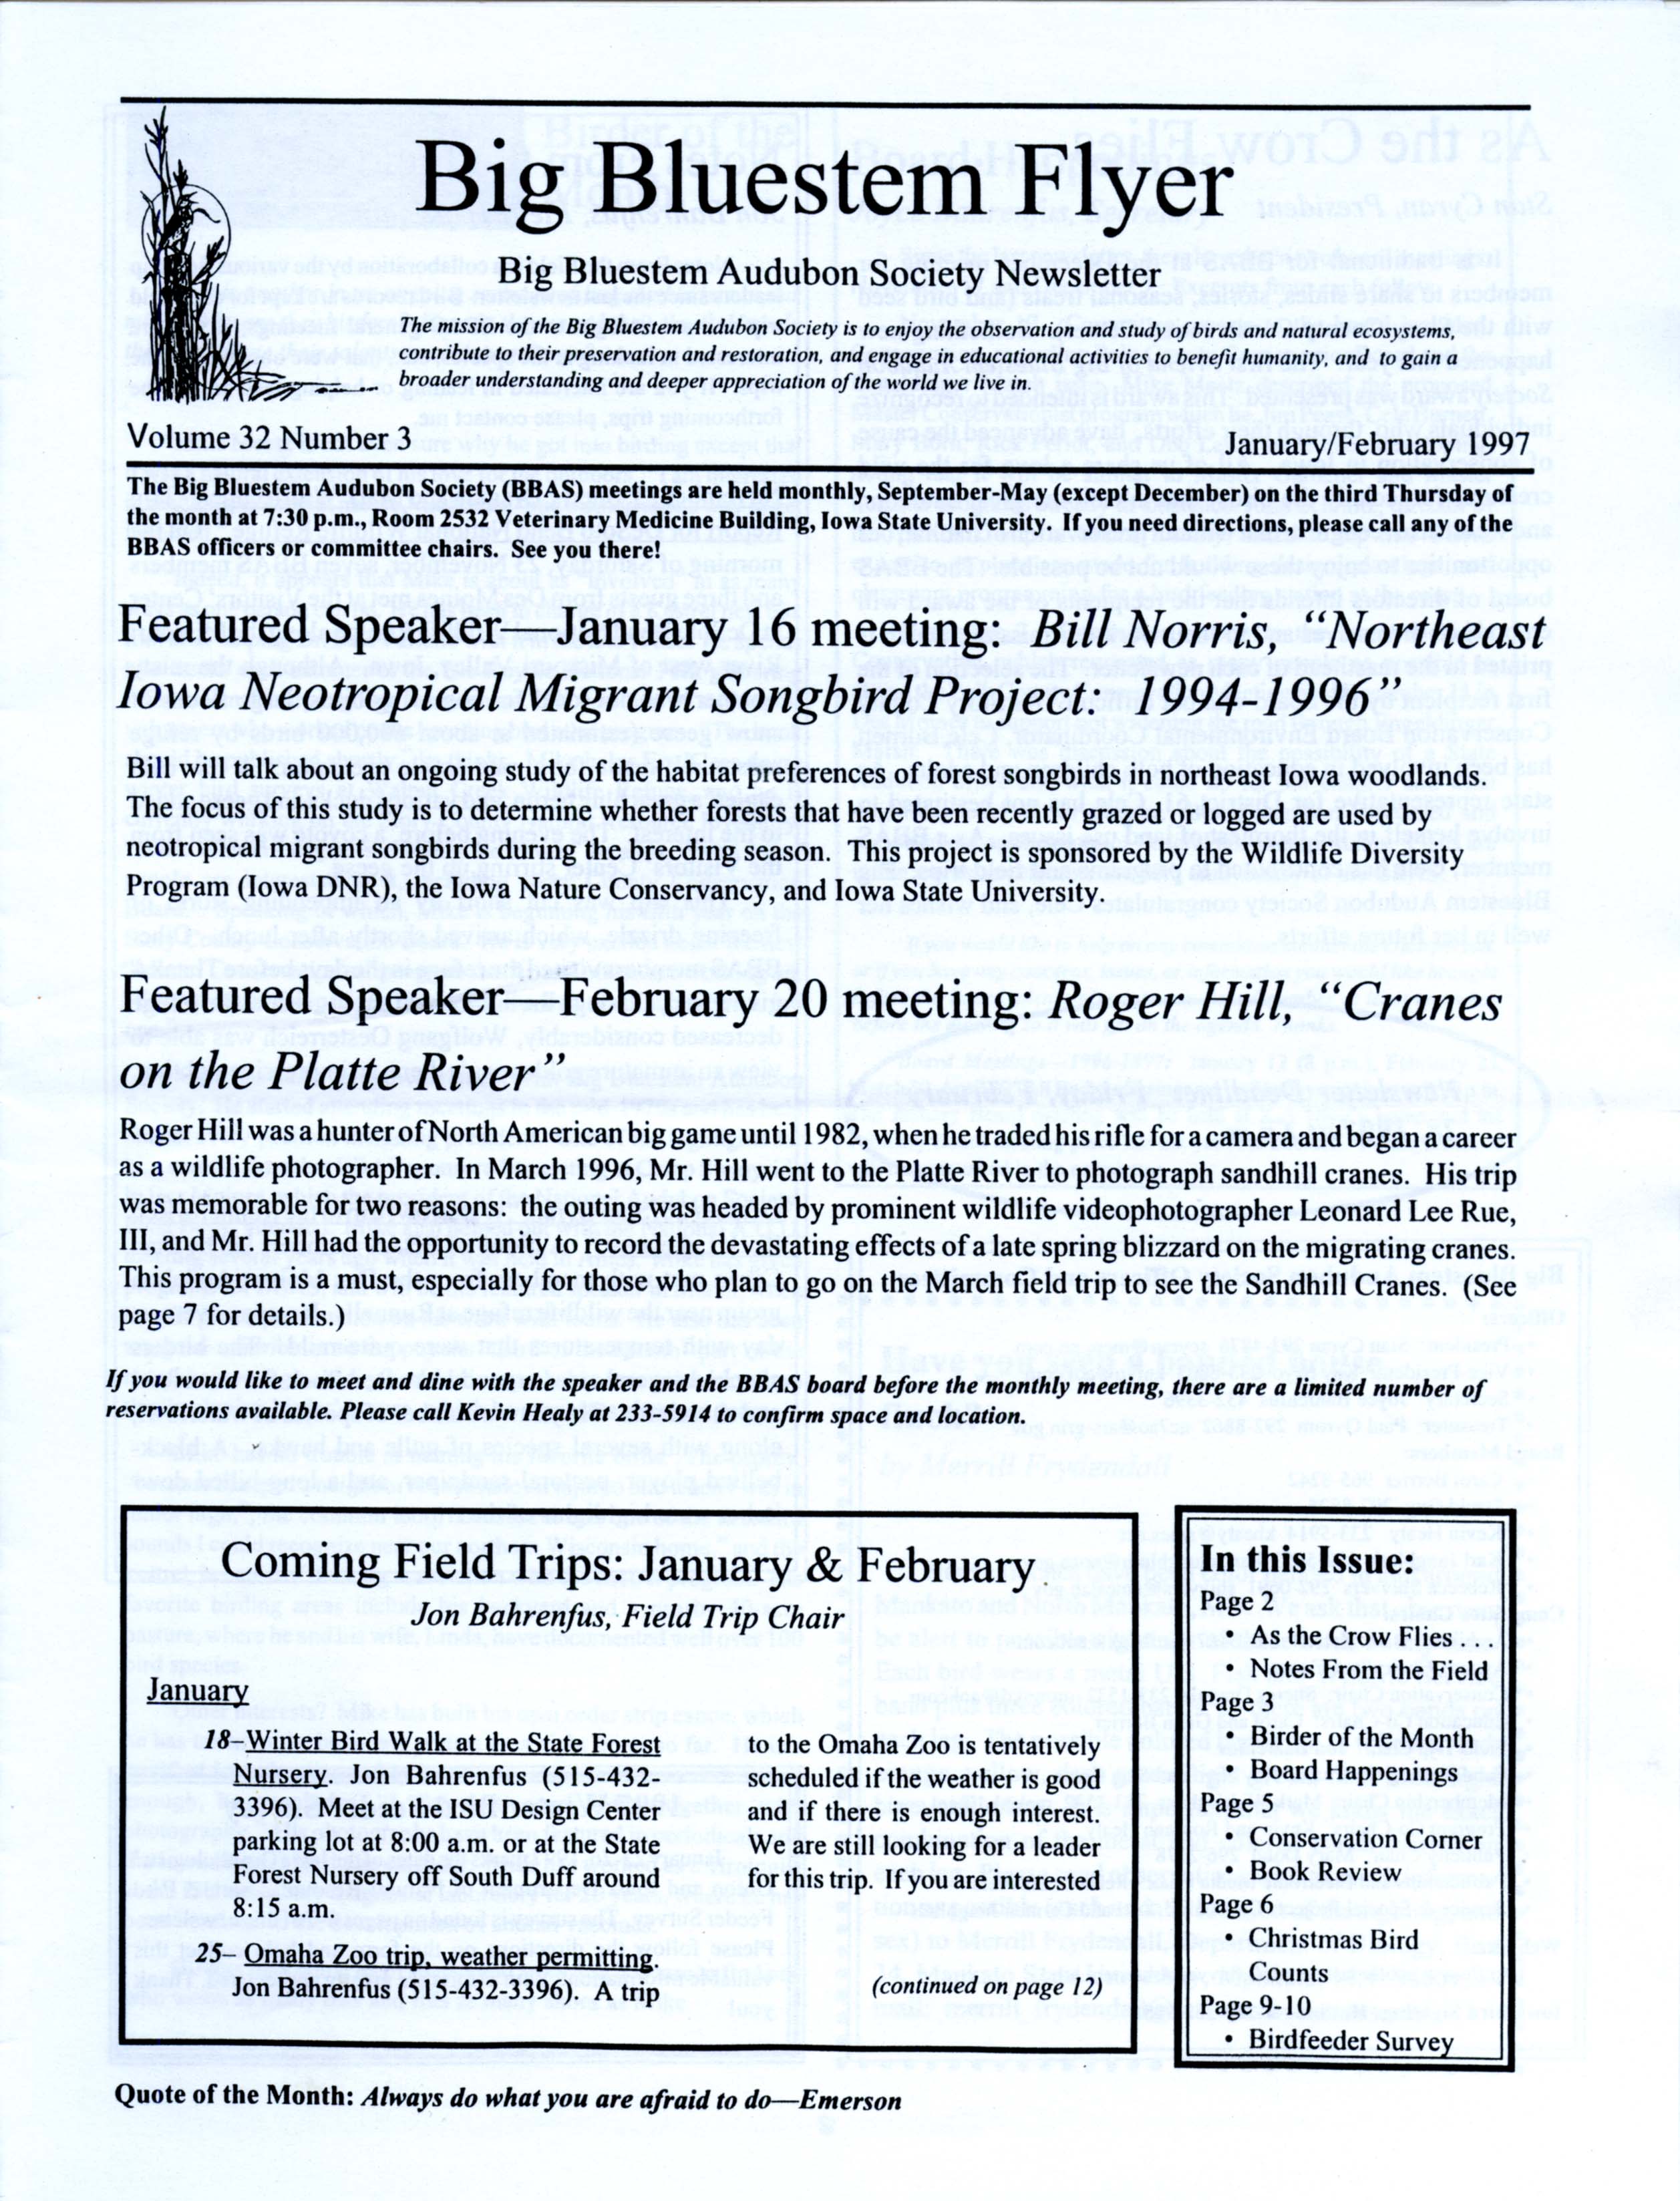 Big Bluestem Flyer, Volume 32, Number 3, January/February 1997